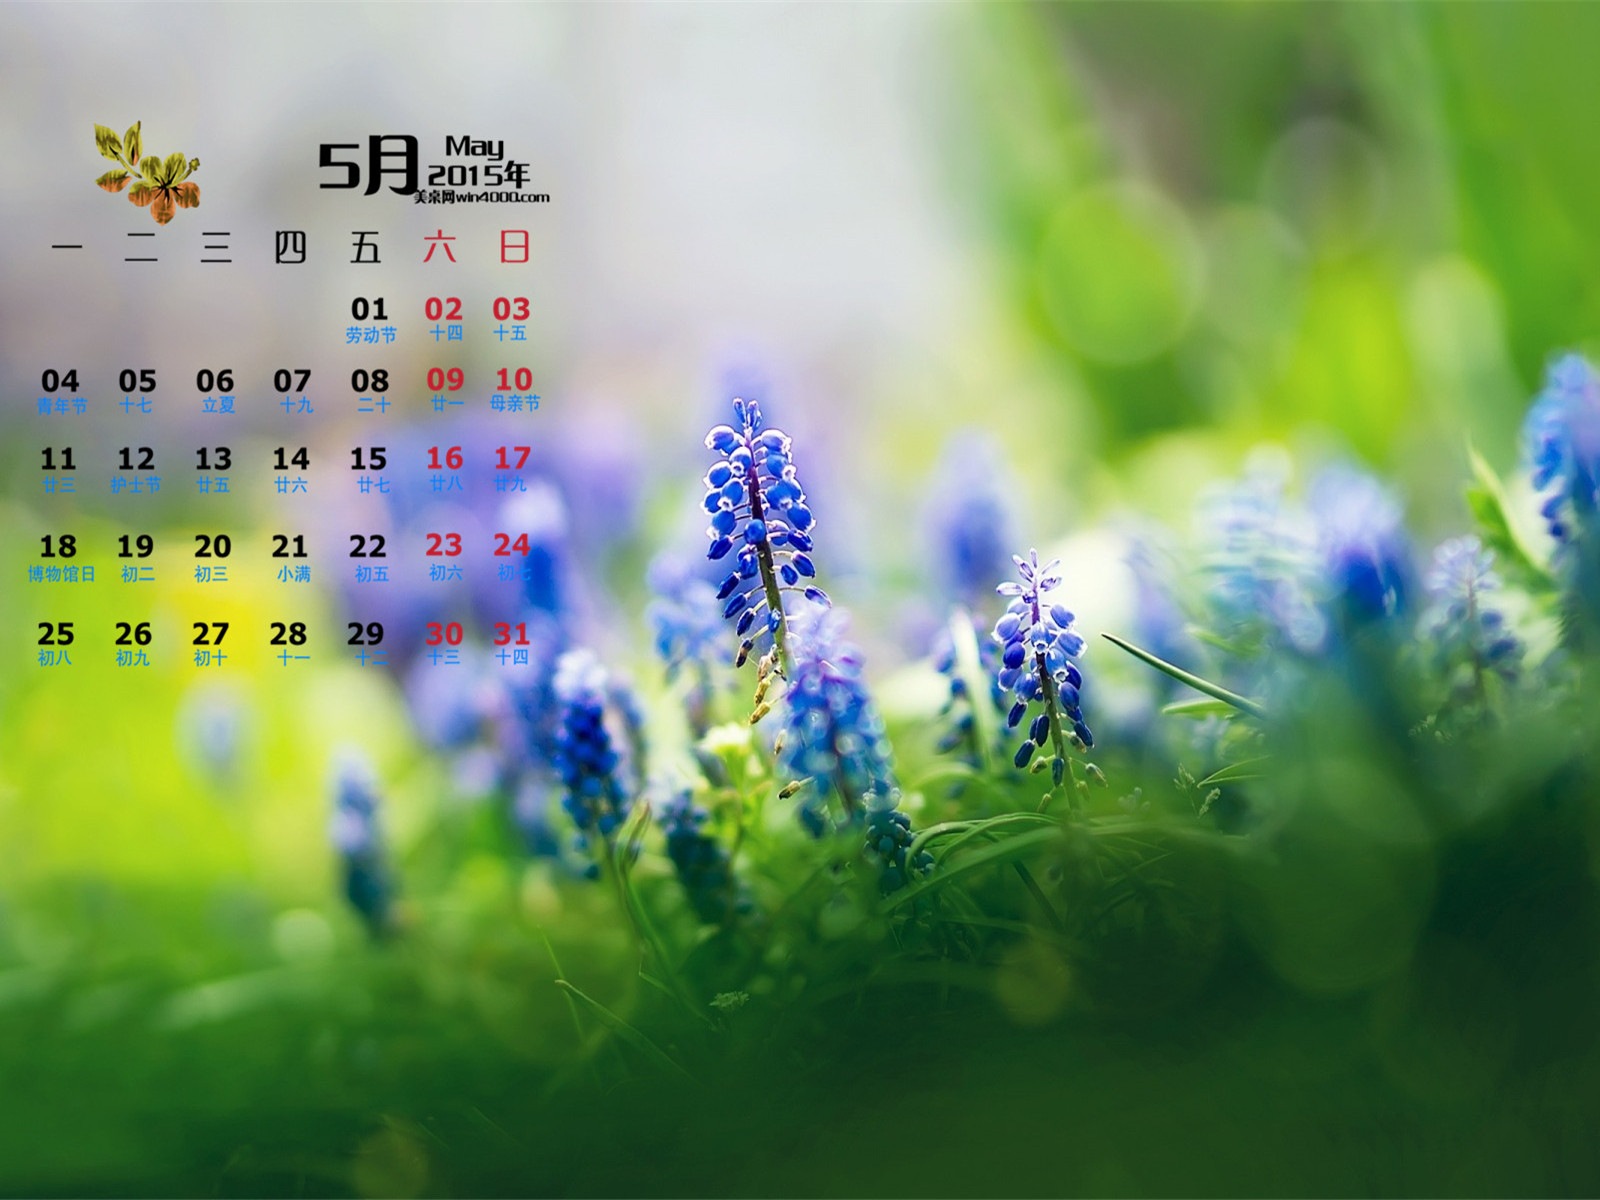 Mai 2015 calendar fond d'écran (1) #16 - 1600x1200